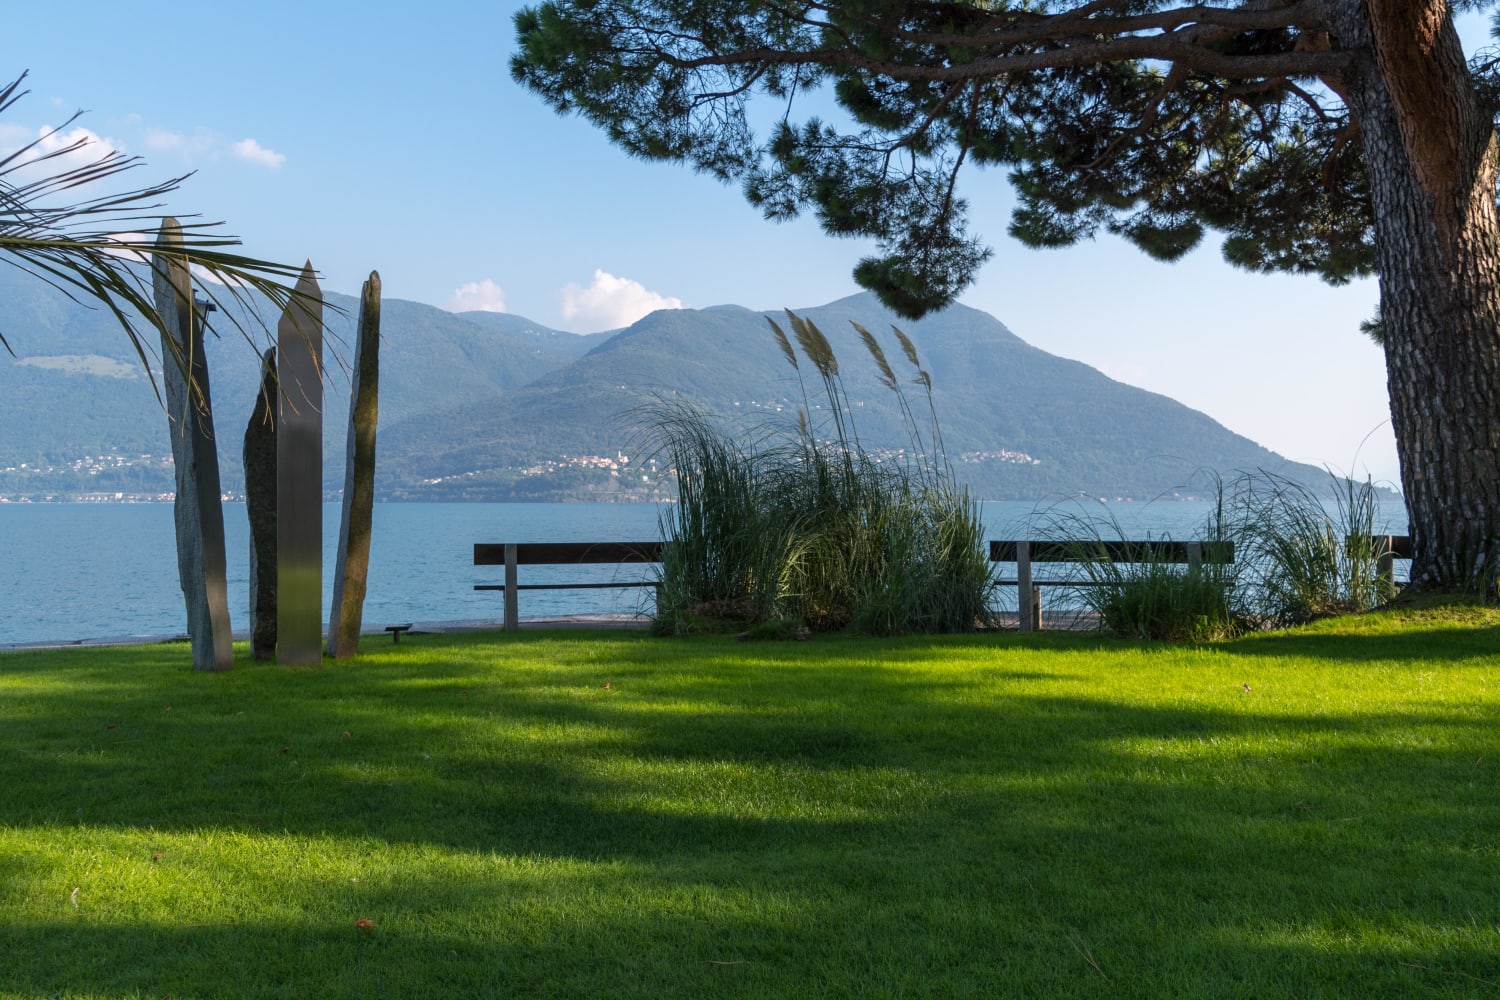 On the shores of Lake Maggiore